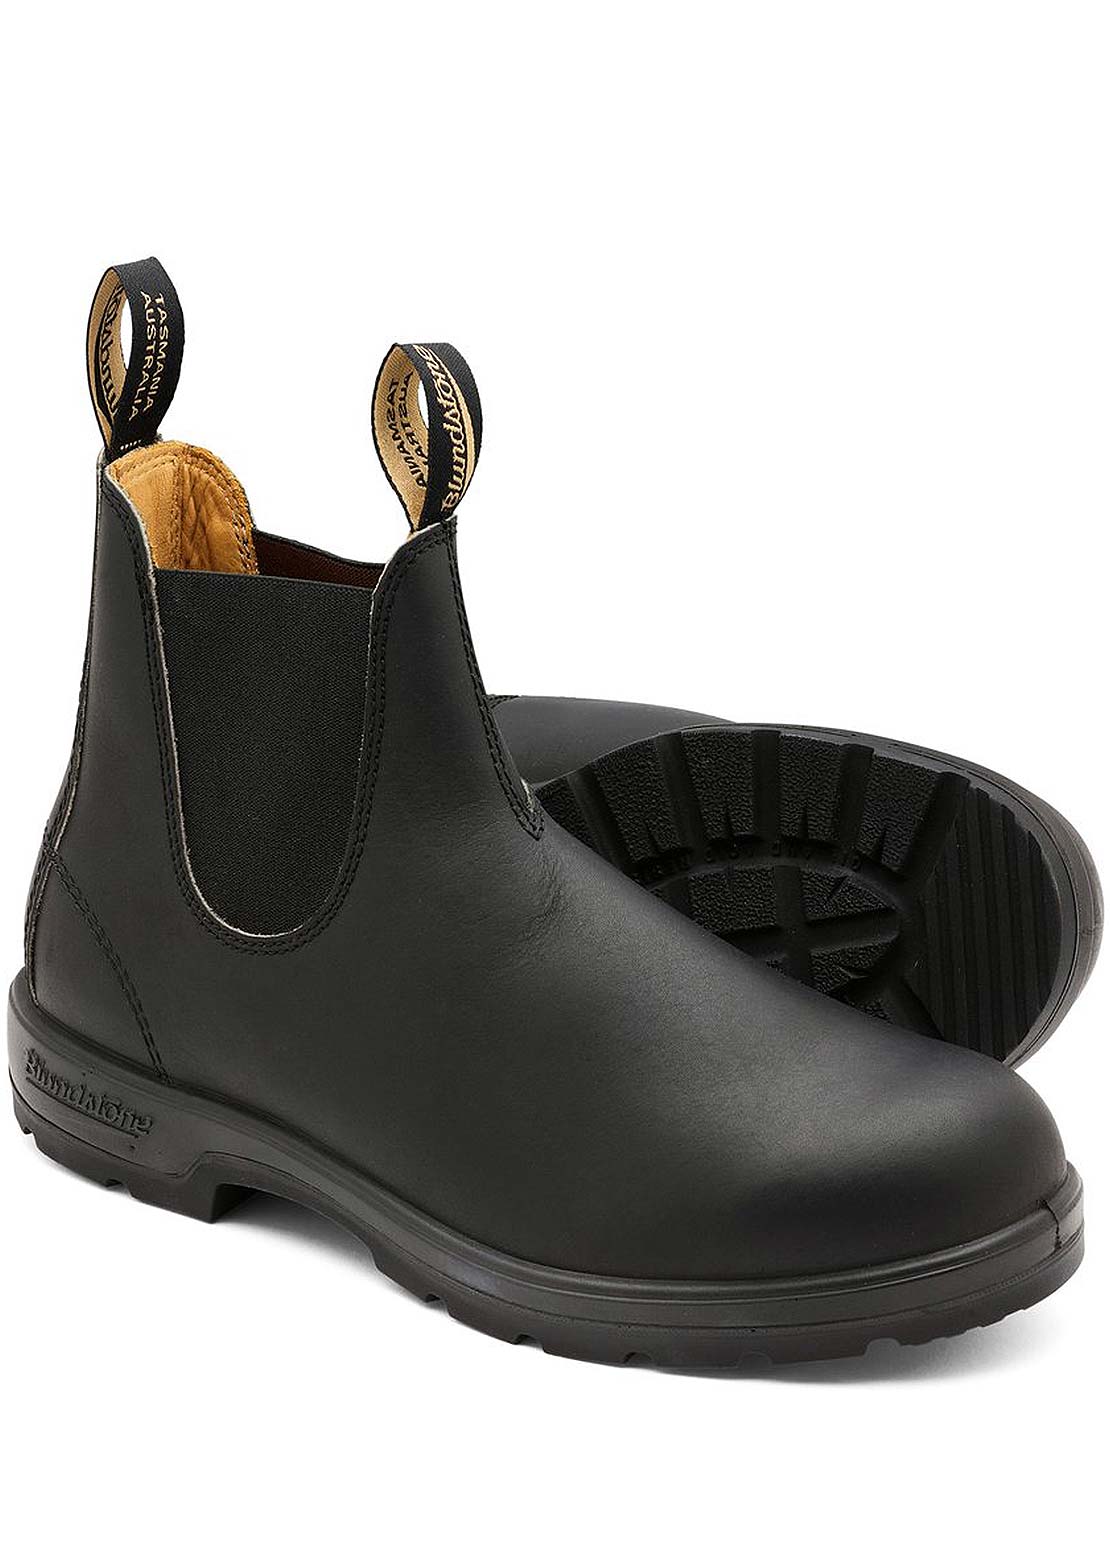 Blundstone 558 Classic Boots Black